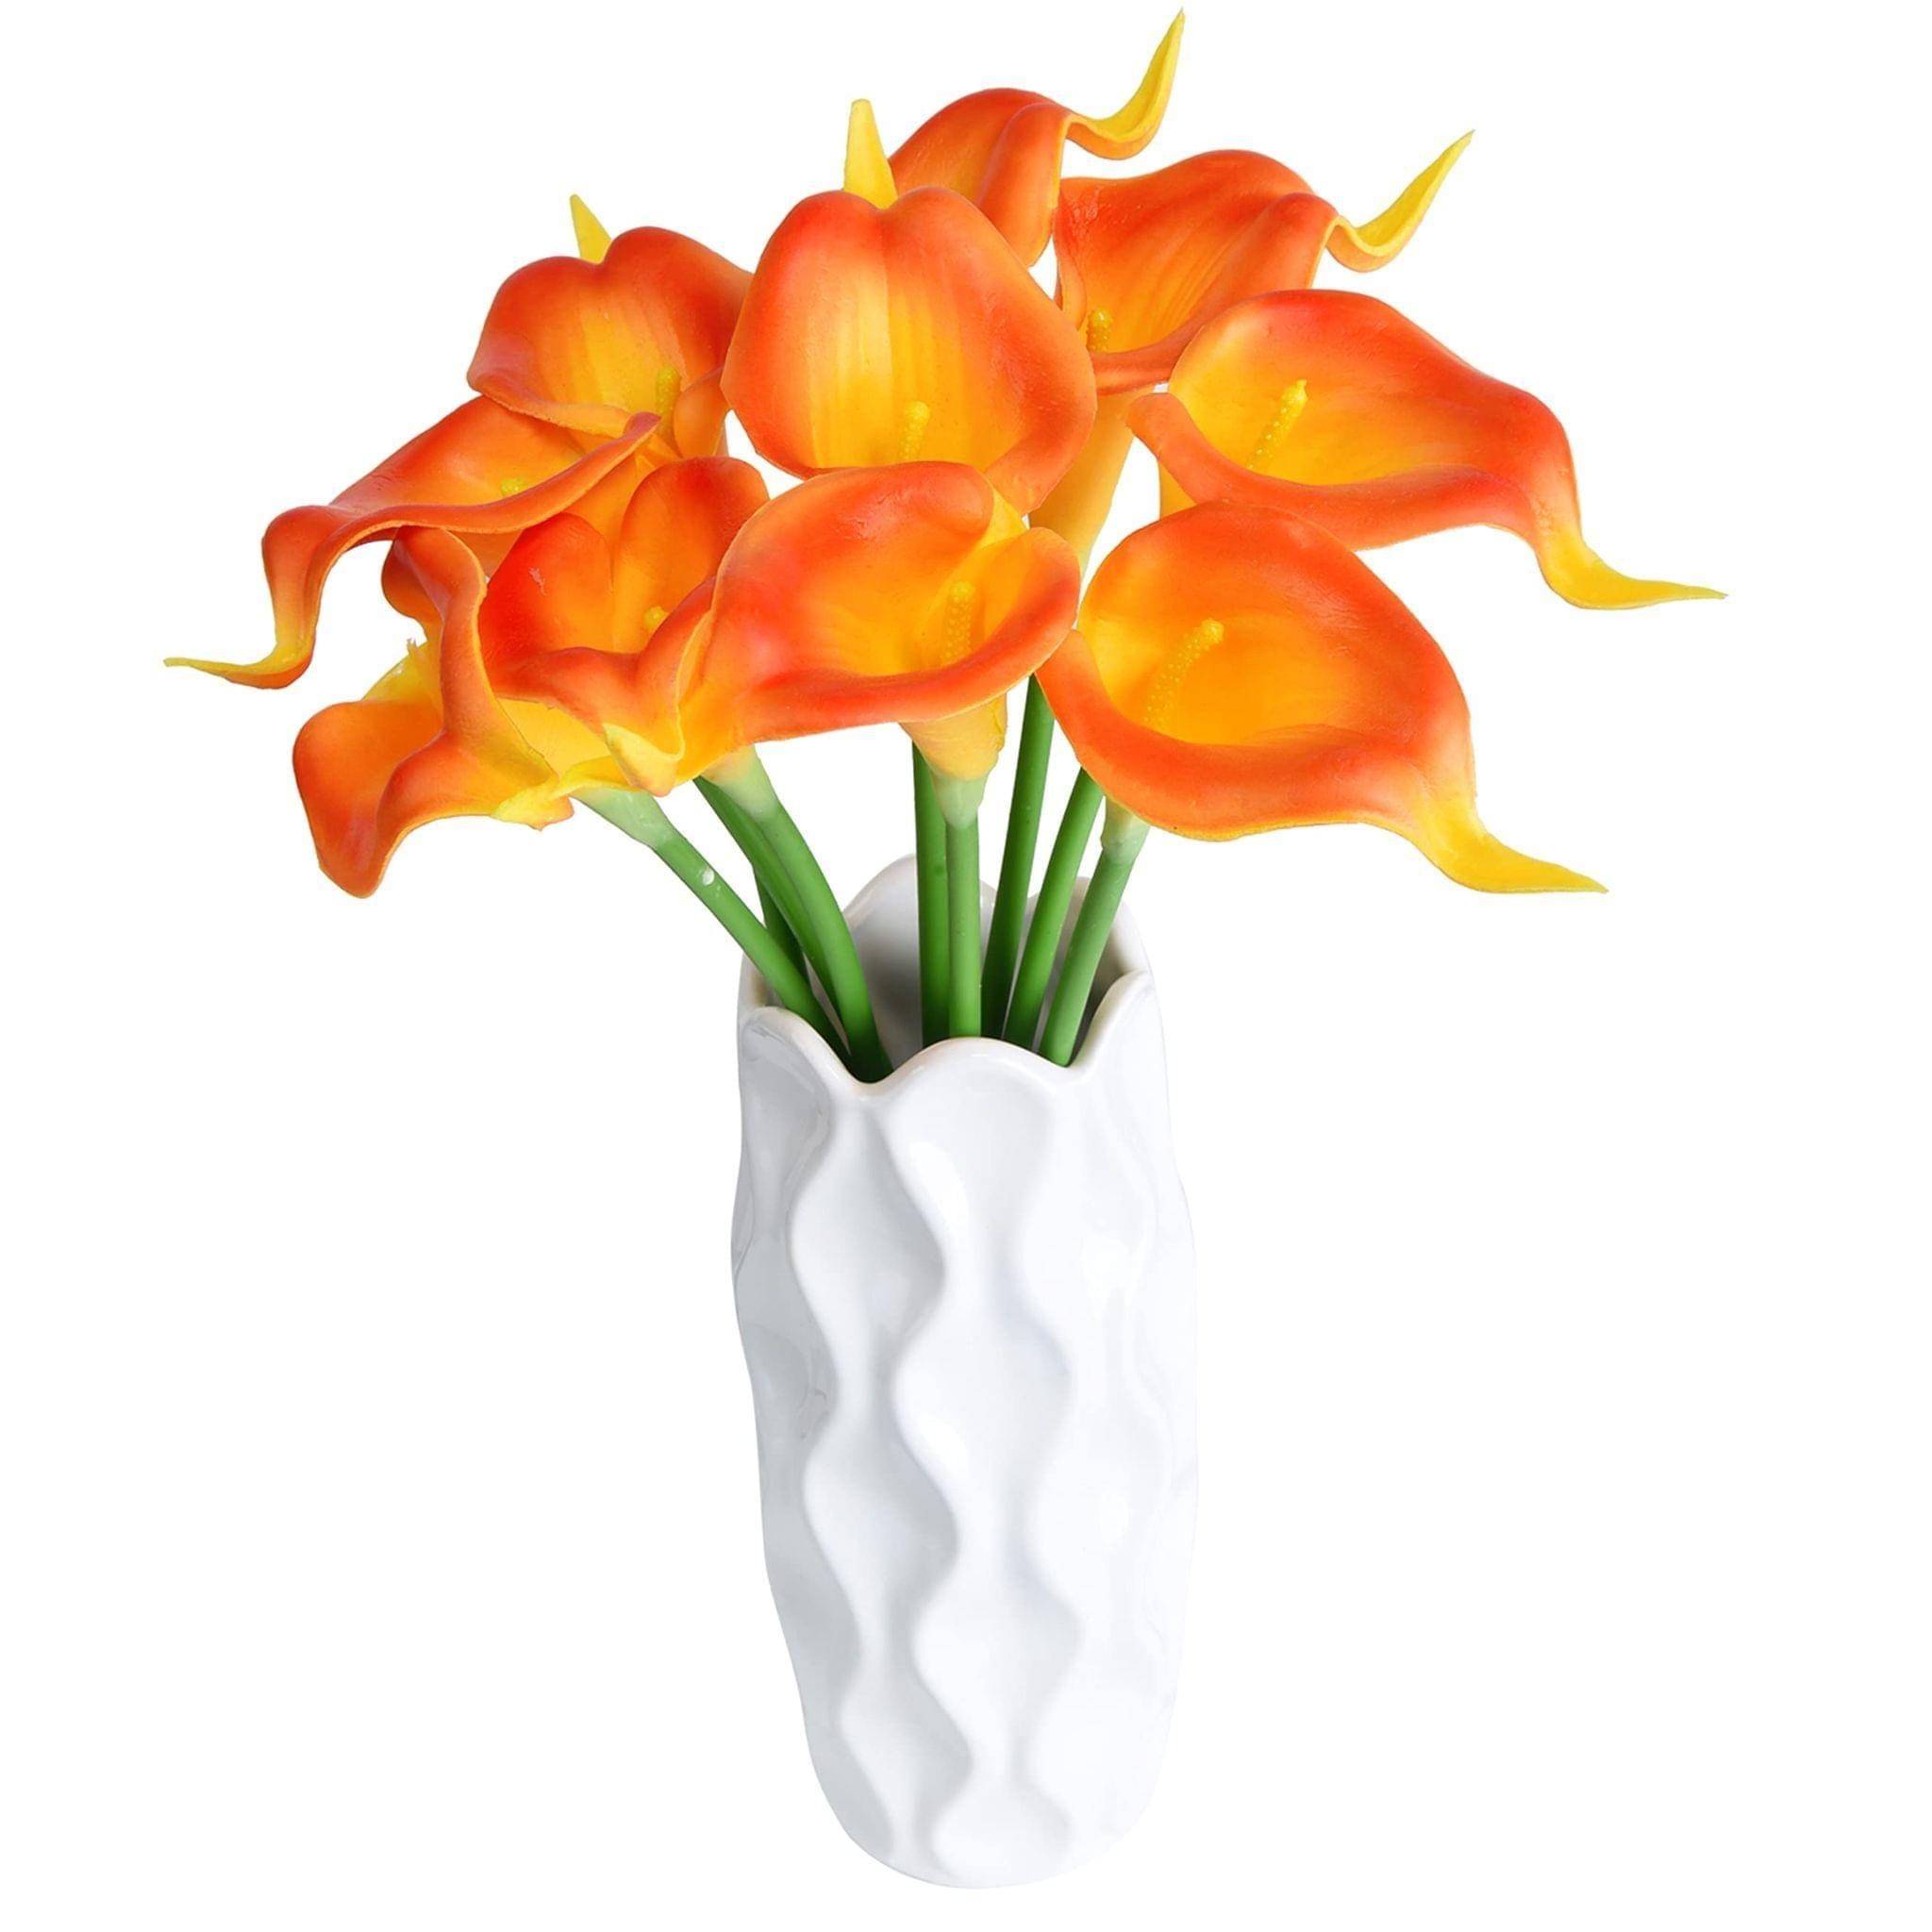 Tdas Artificial Lily Flowers Plants Home Decor Items Flower Plant for vase  Living Room Hall Bedroom Decorative Decoration - 34 CM Long (Pot Not